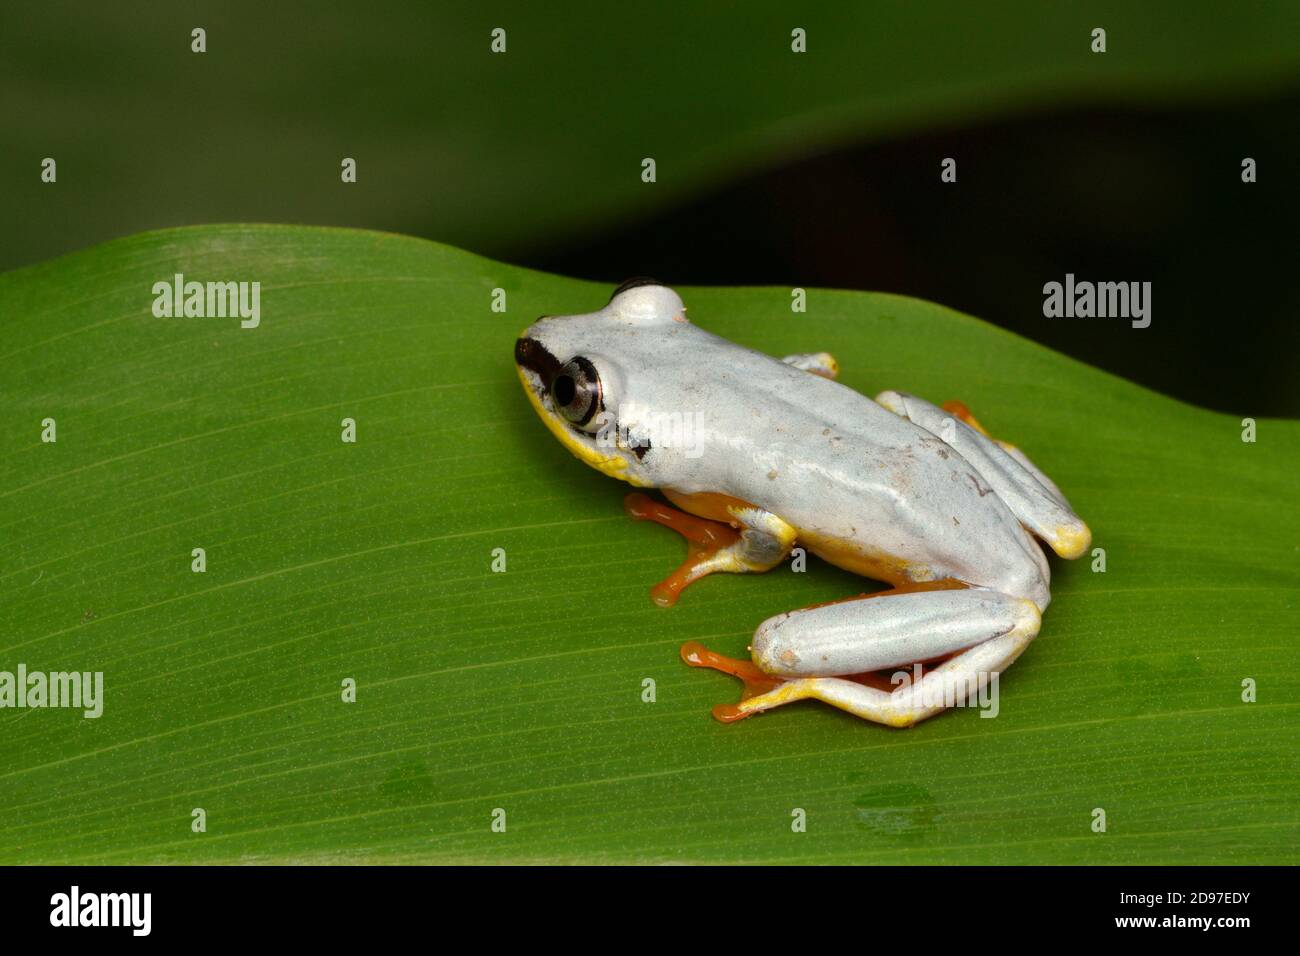 Madagascar Reed Frog (Heterixalus madagascariensis) with its diurnal colours, Andasibe, madagascar Stock Photo